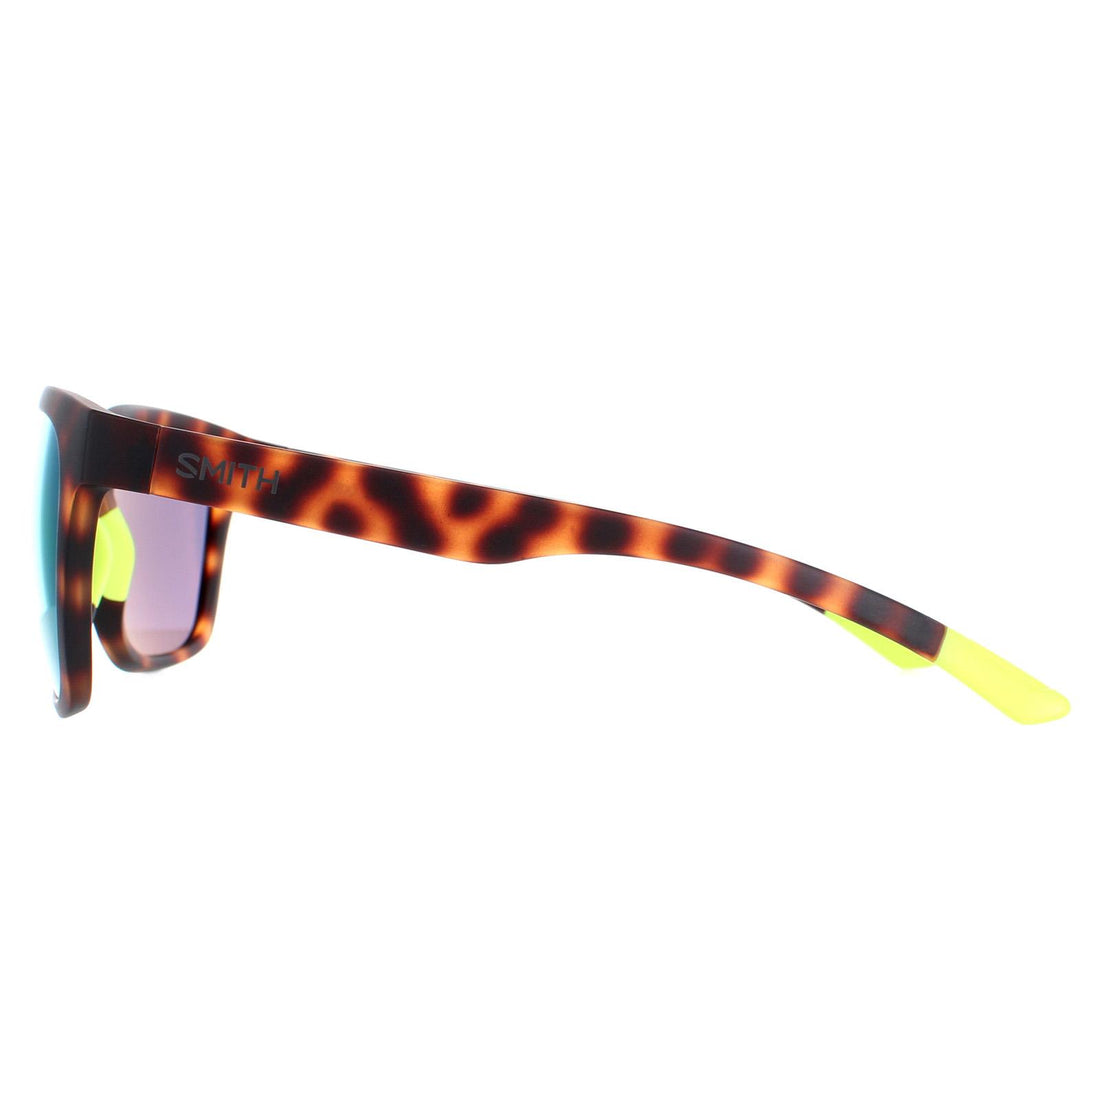 Smith Sunglasses Founder A84 X8 Matte Tortoise Green Mirror